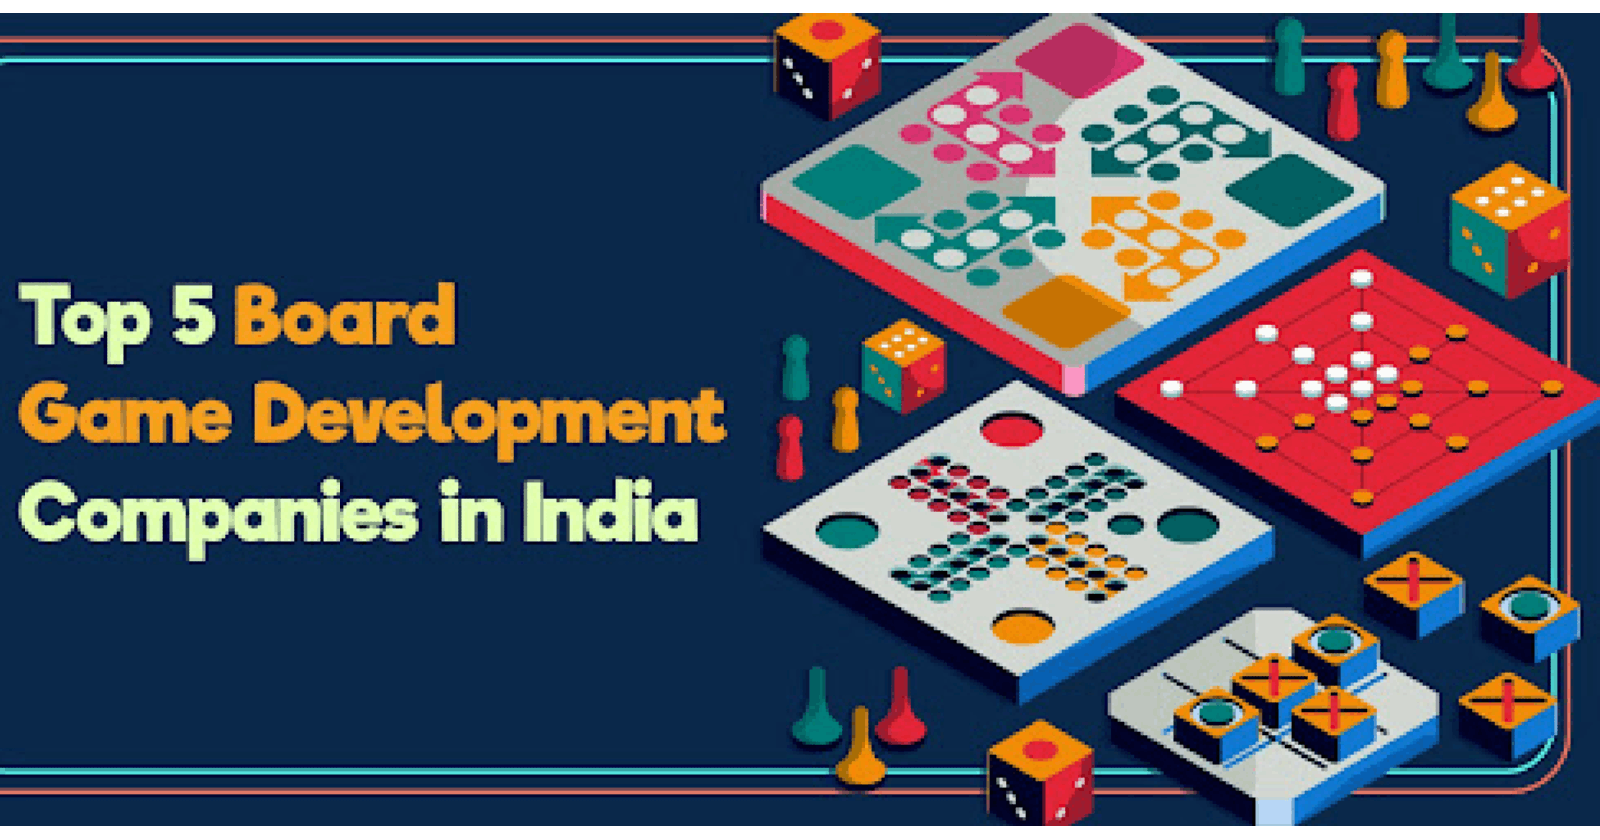 Top 5 board game development companies in India